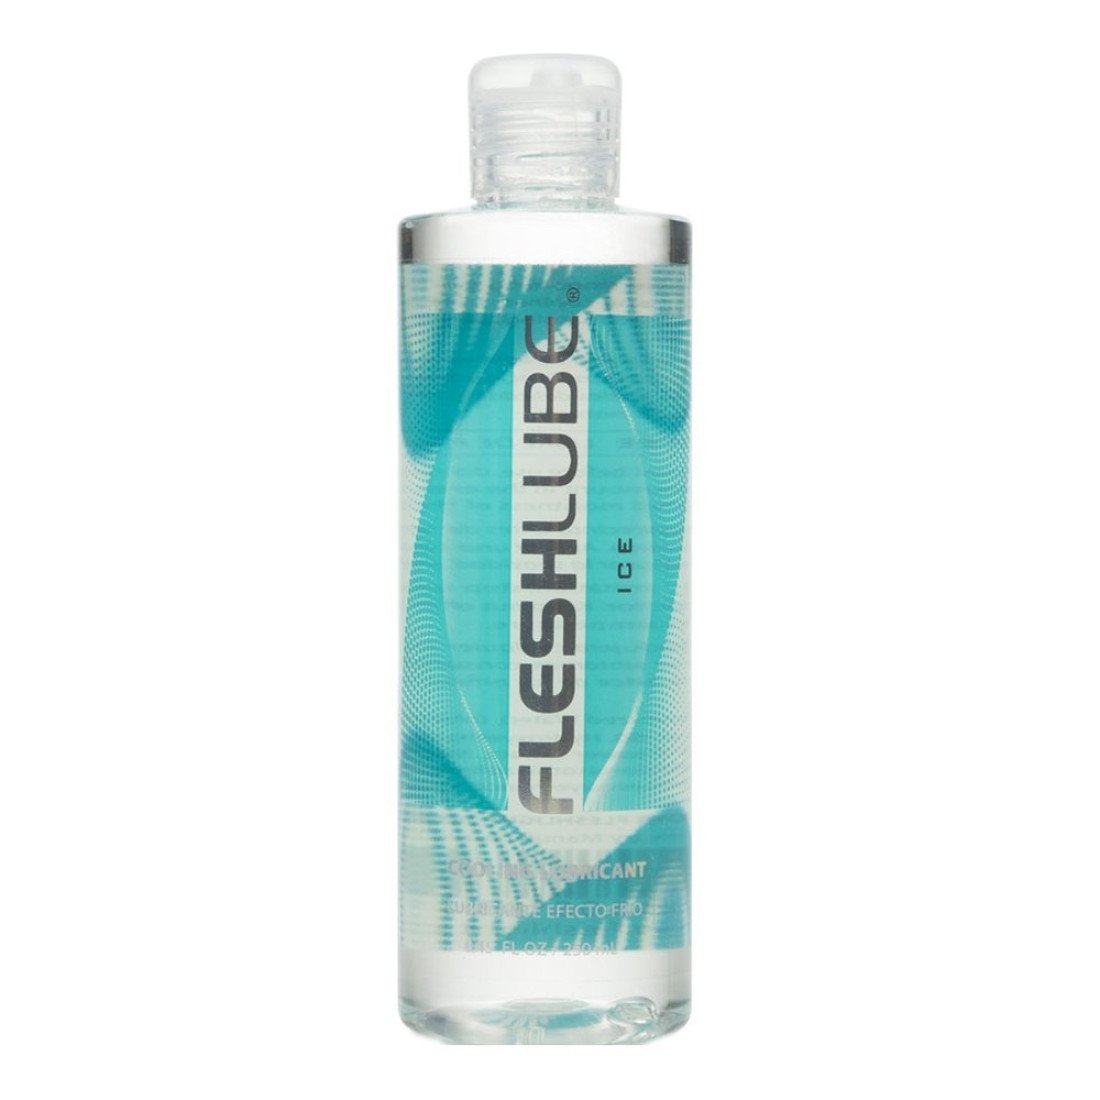 Šaldantis vandens pagrindo lubrikantas „FleshLube Ice“, 250 ml - Fleshlight